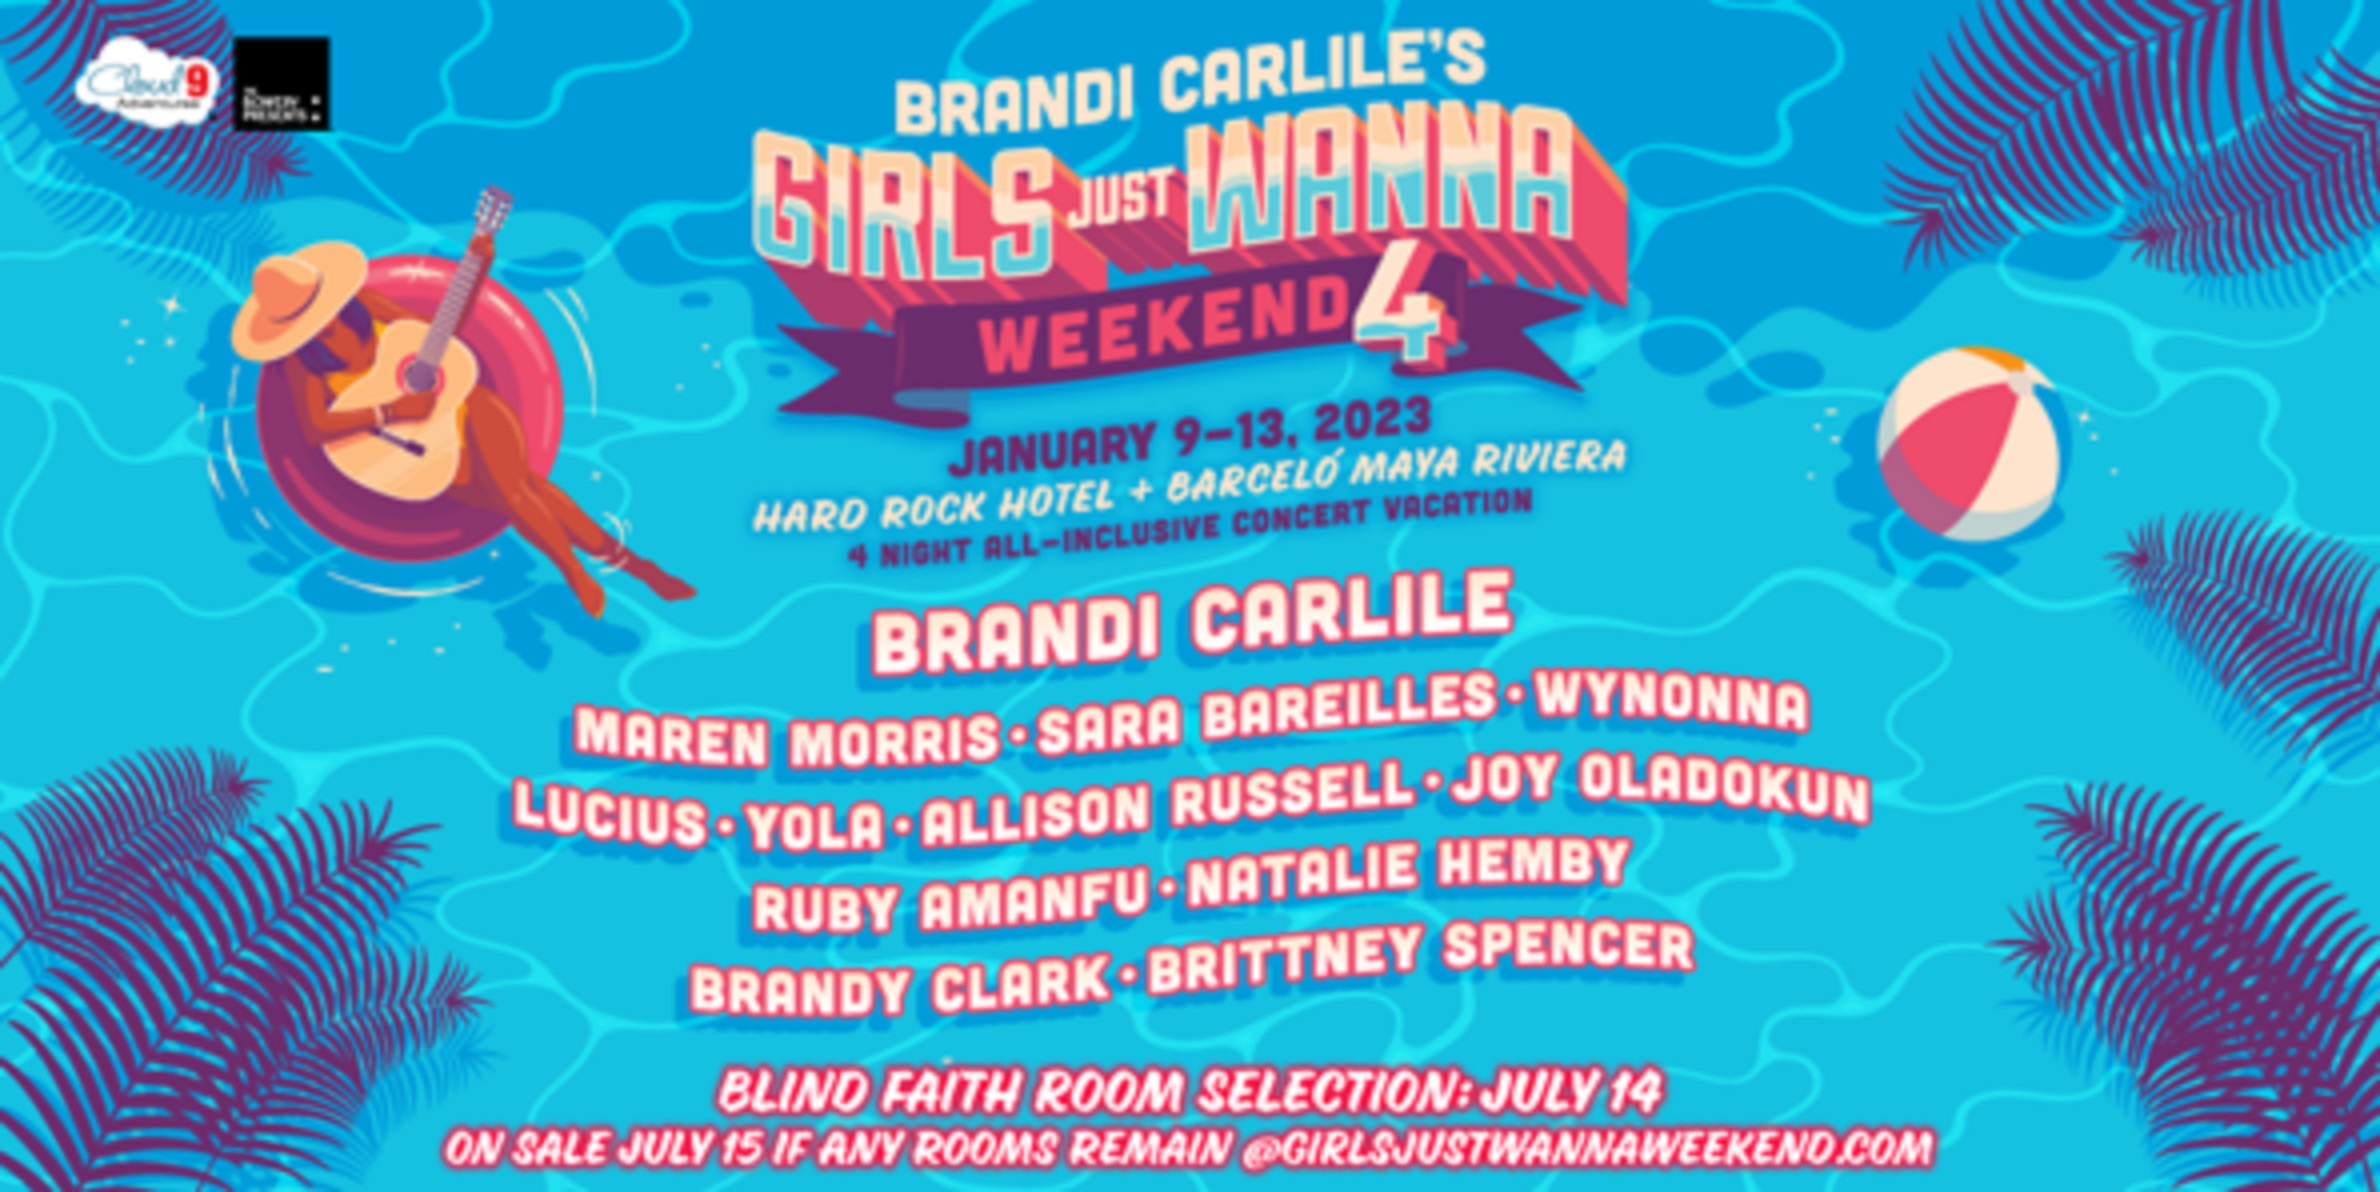 Brandi Carlile unveils 4th Annual “Girls Just Wanna Weekend” lineup